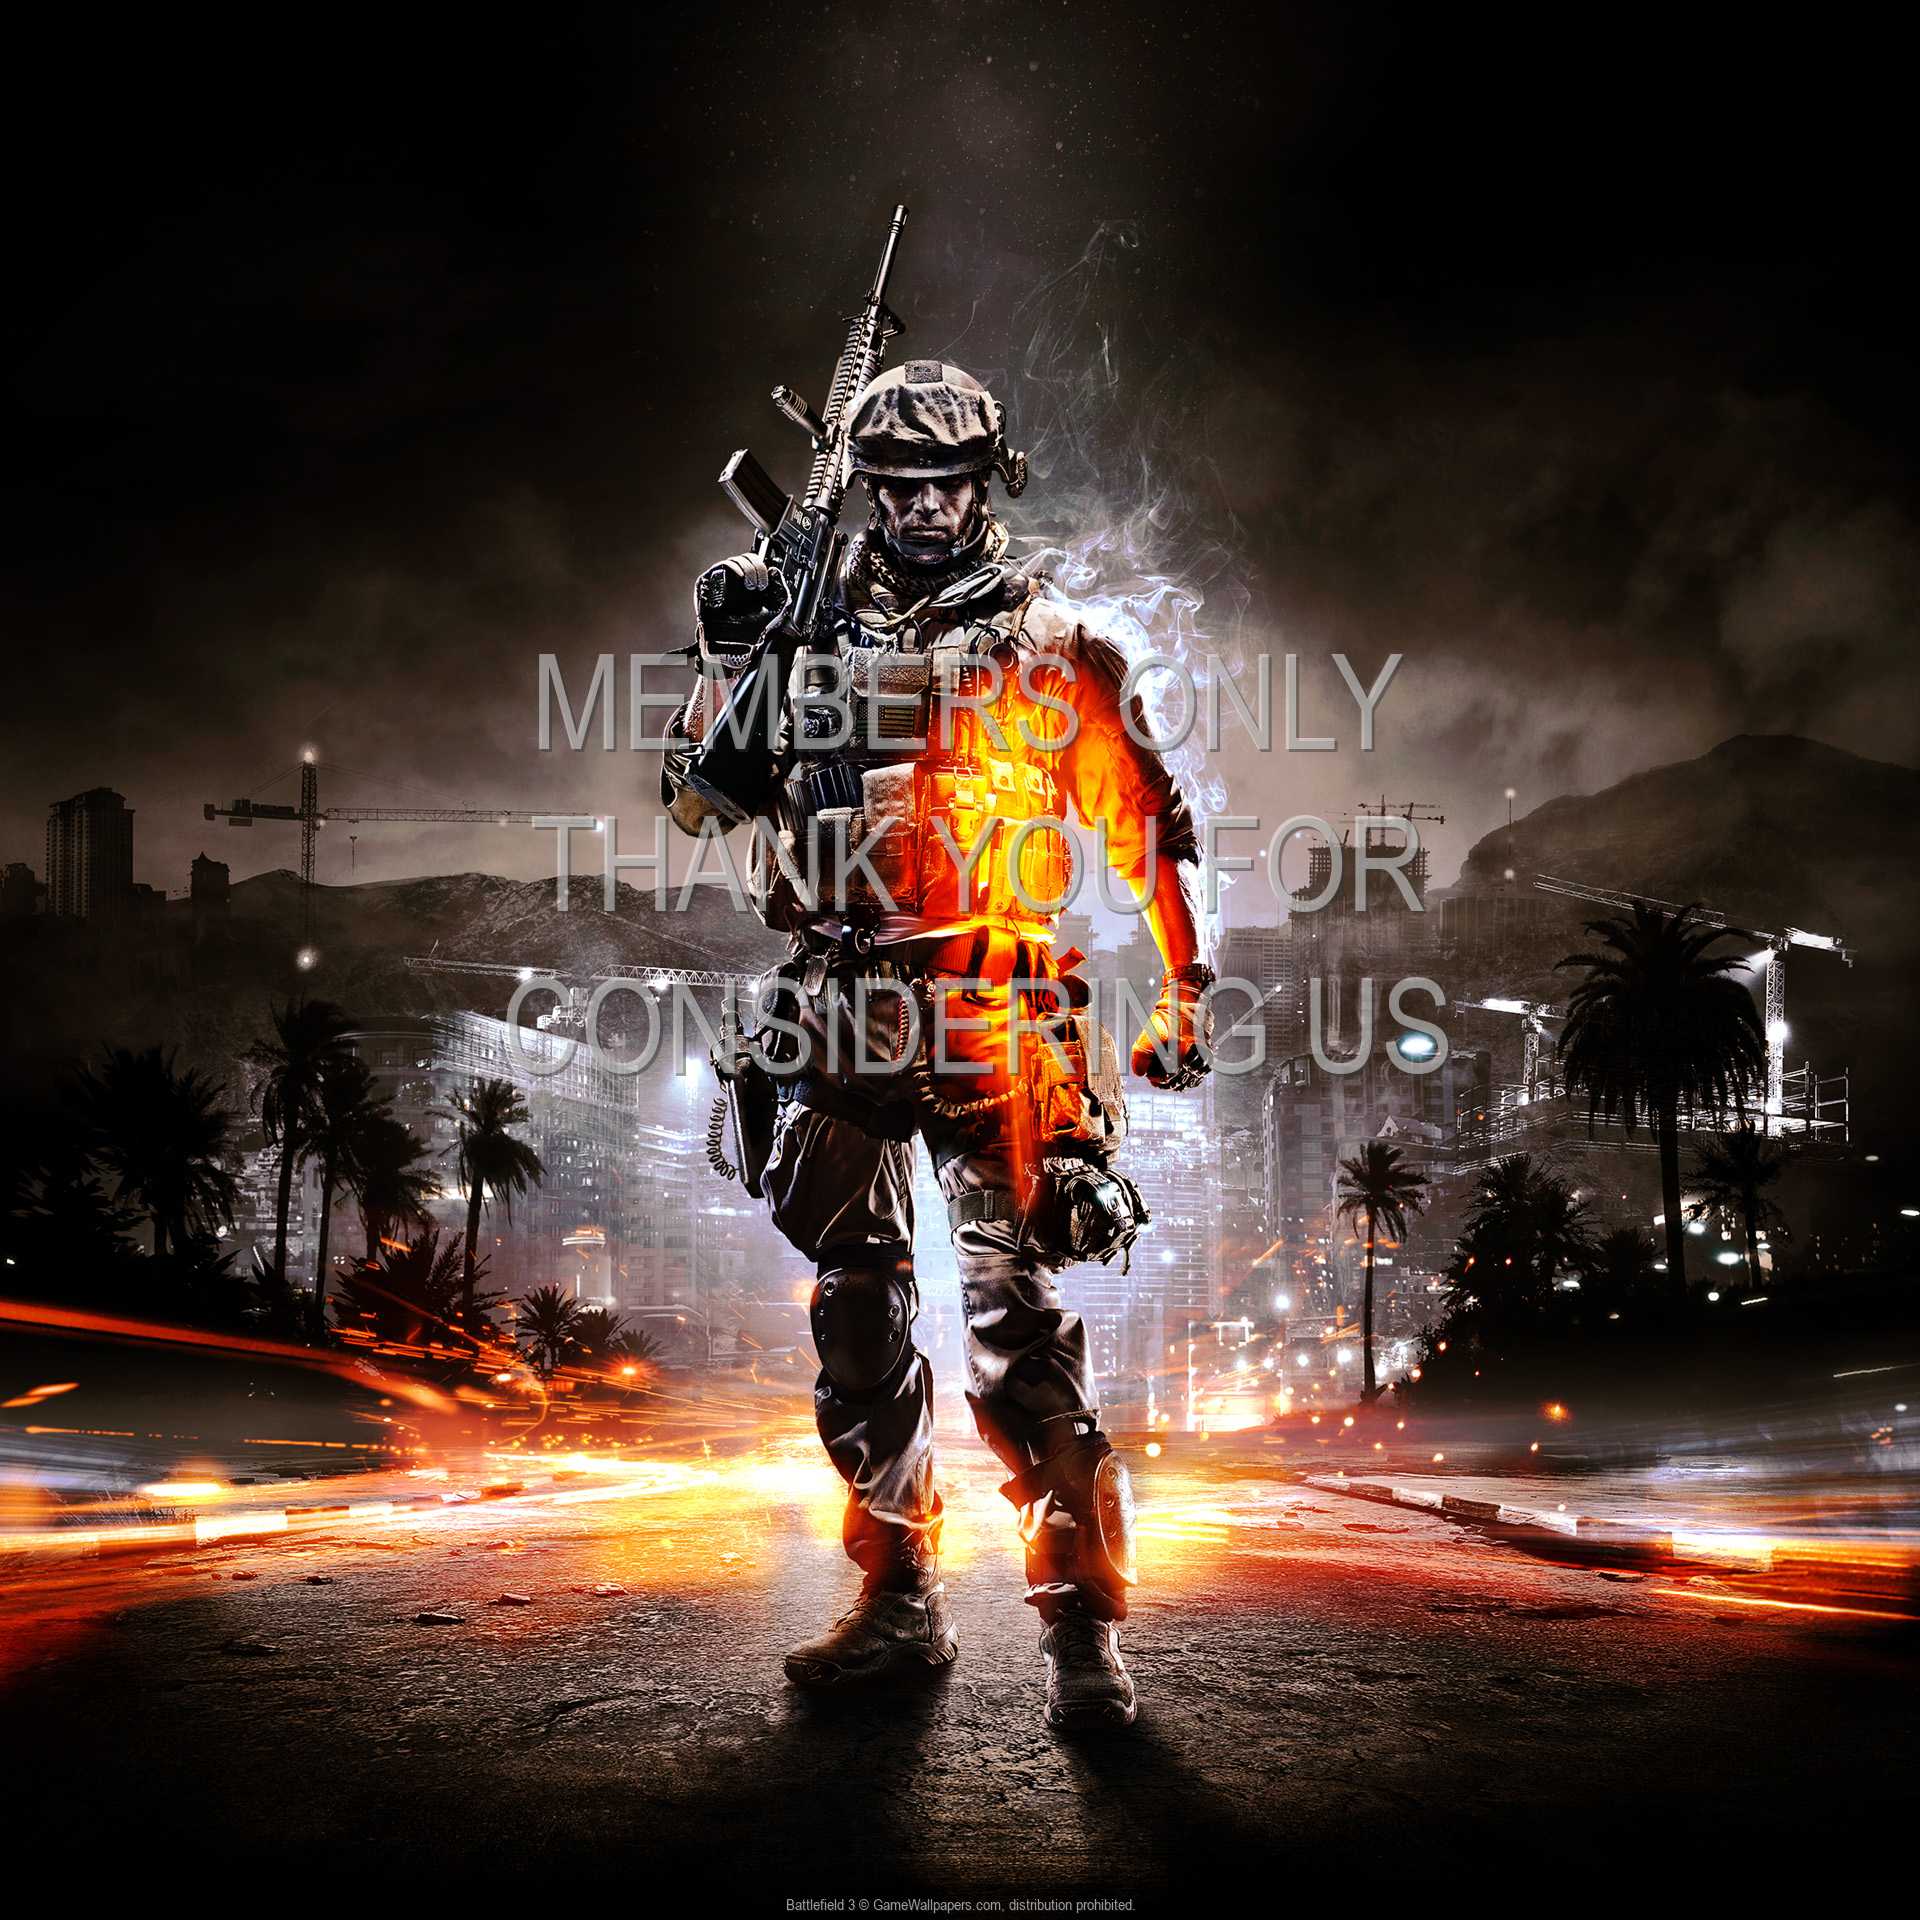 Battlefield 3 1080p%20Horizontal Mobile wallpaper or background 08